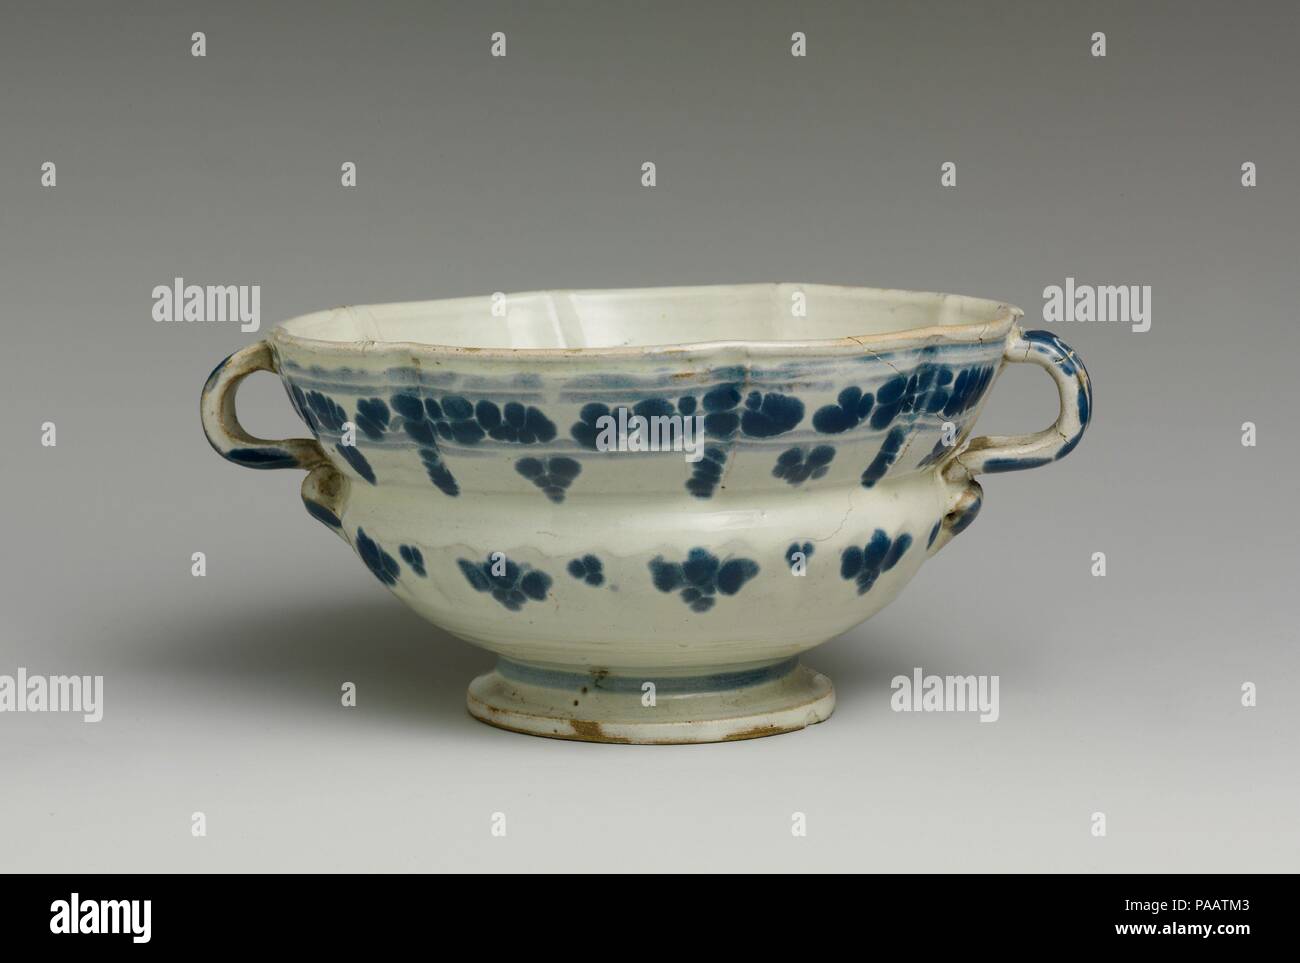 Bowl. Culture: Mexican. Dimensions: Diam. 3 5/8 in. (9.2 cm). Date: ca. 1750-1800. Museum: Metropolitan Museum of Art, New York, USA. Stock Photo